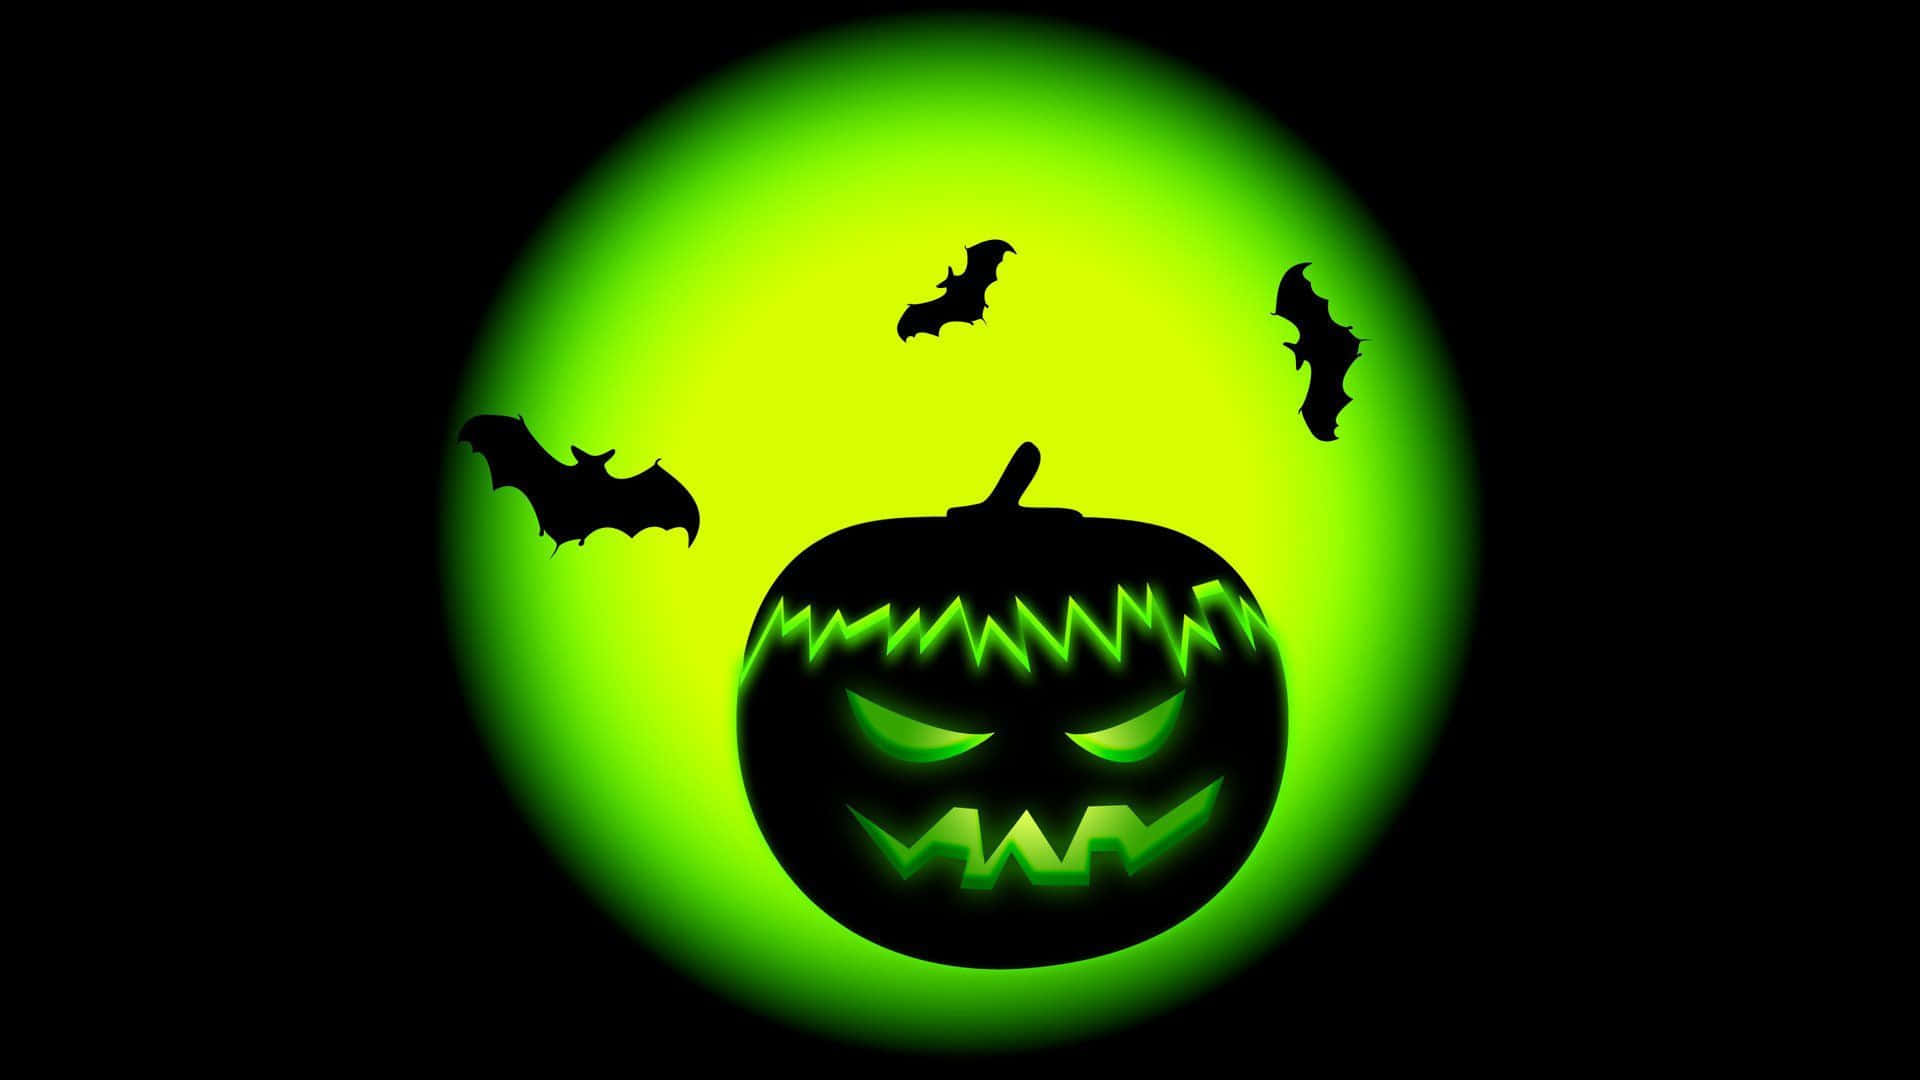 Green Neon Halloween Jack-o-lantern Wallpaper